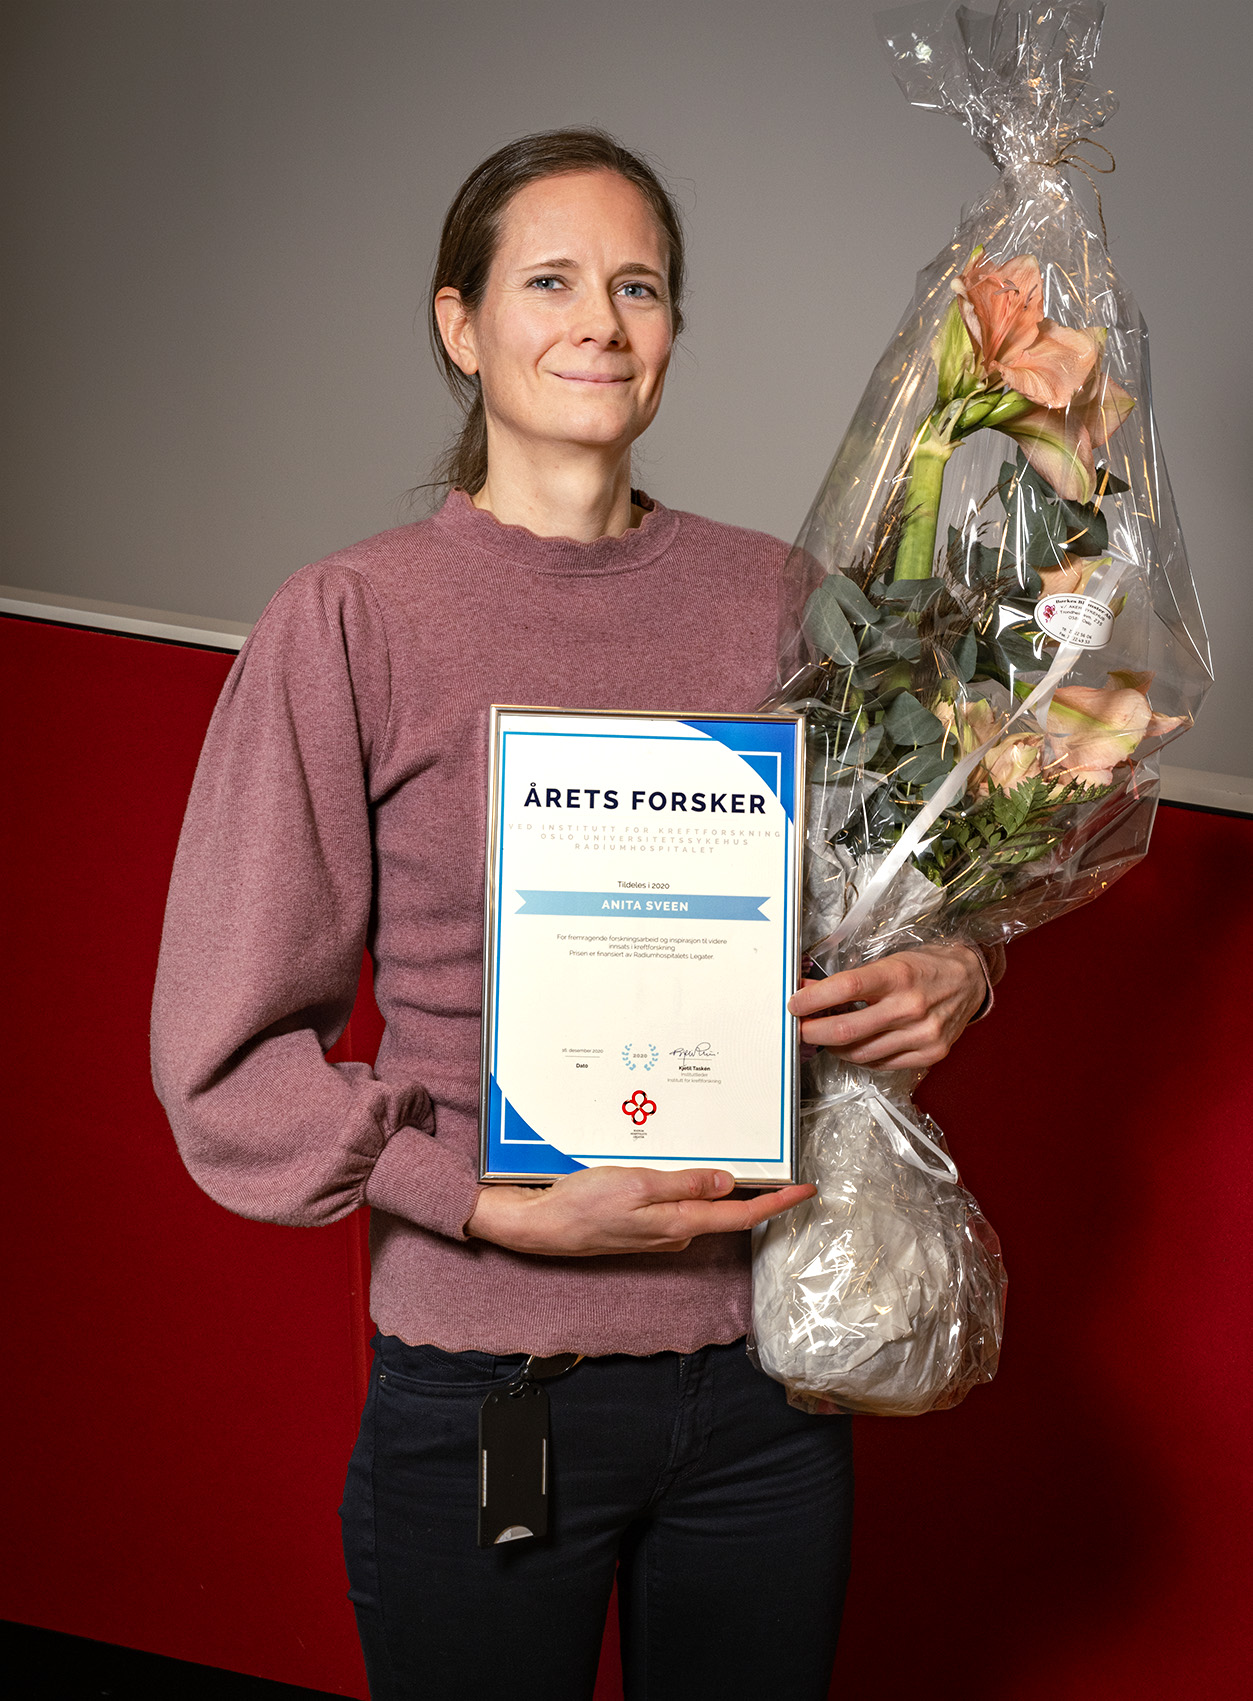 Anita Sveen (photo: Per M. Didriksen)